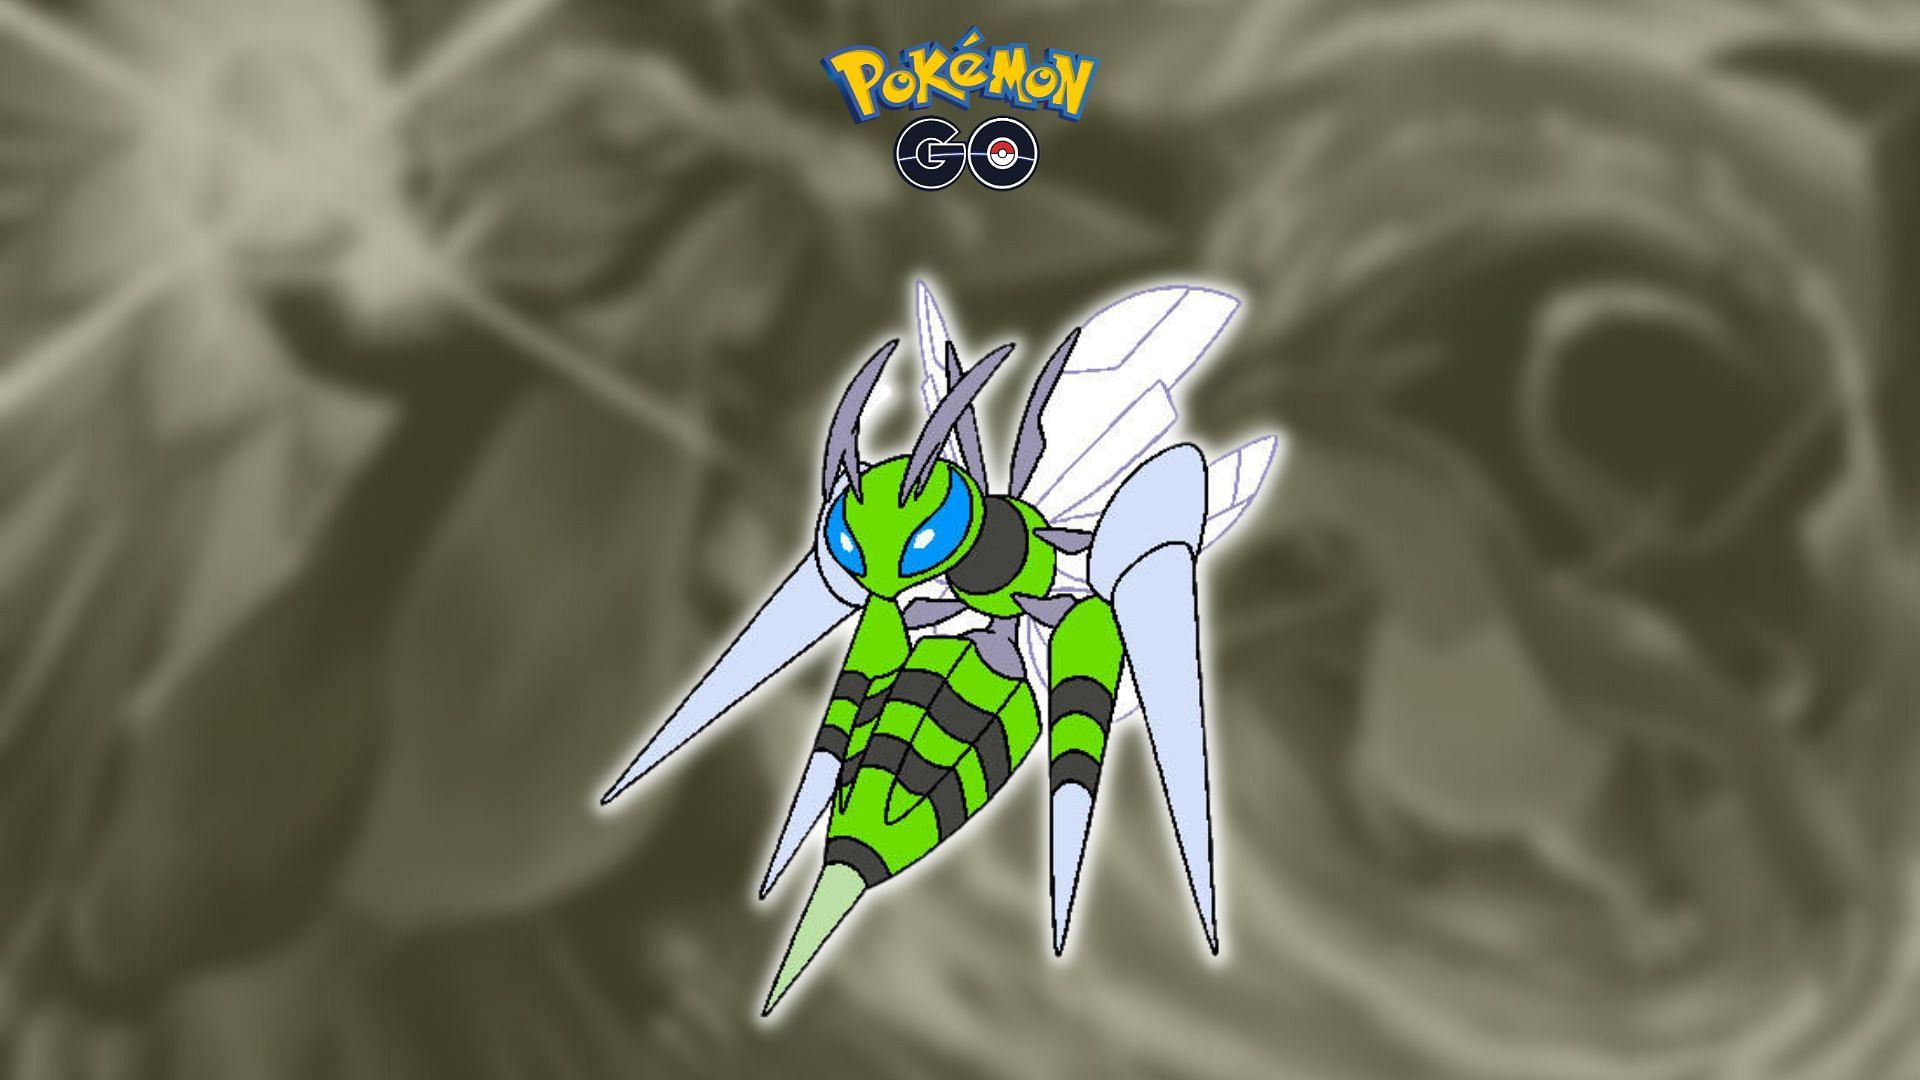 Shiny Mega Beedrill as seen in the game (Image via Sportskeeda)